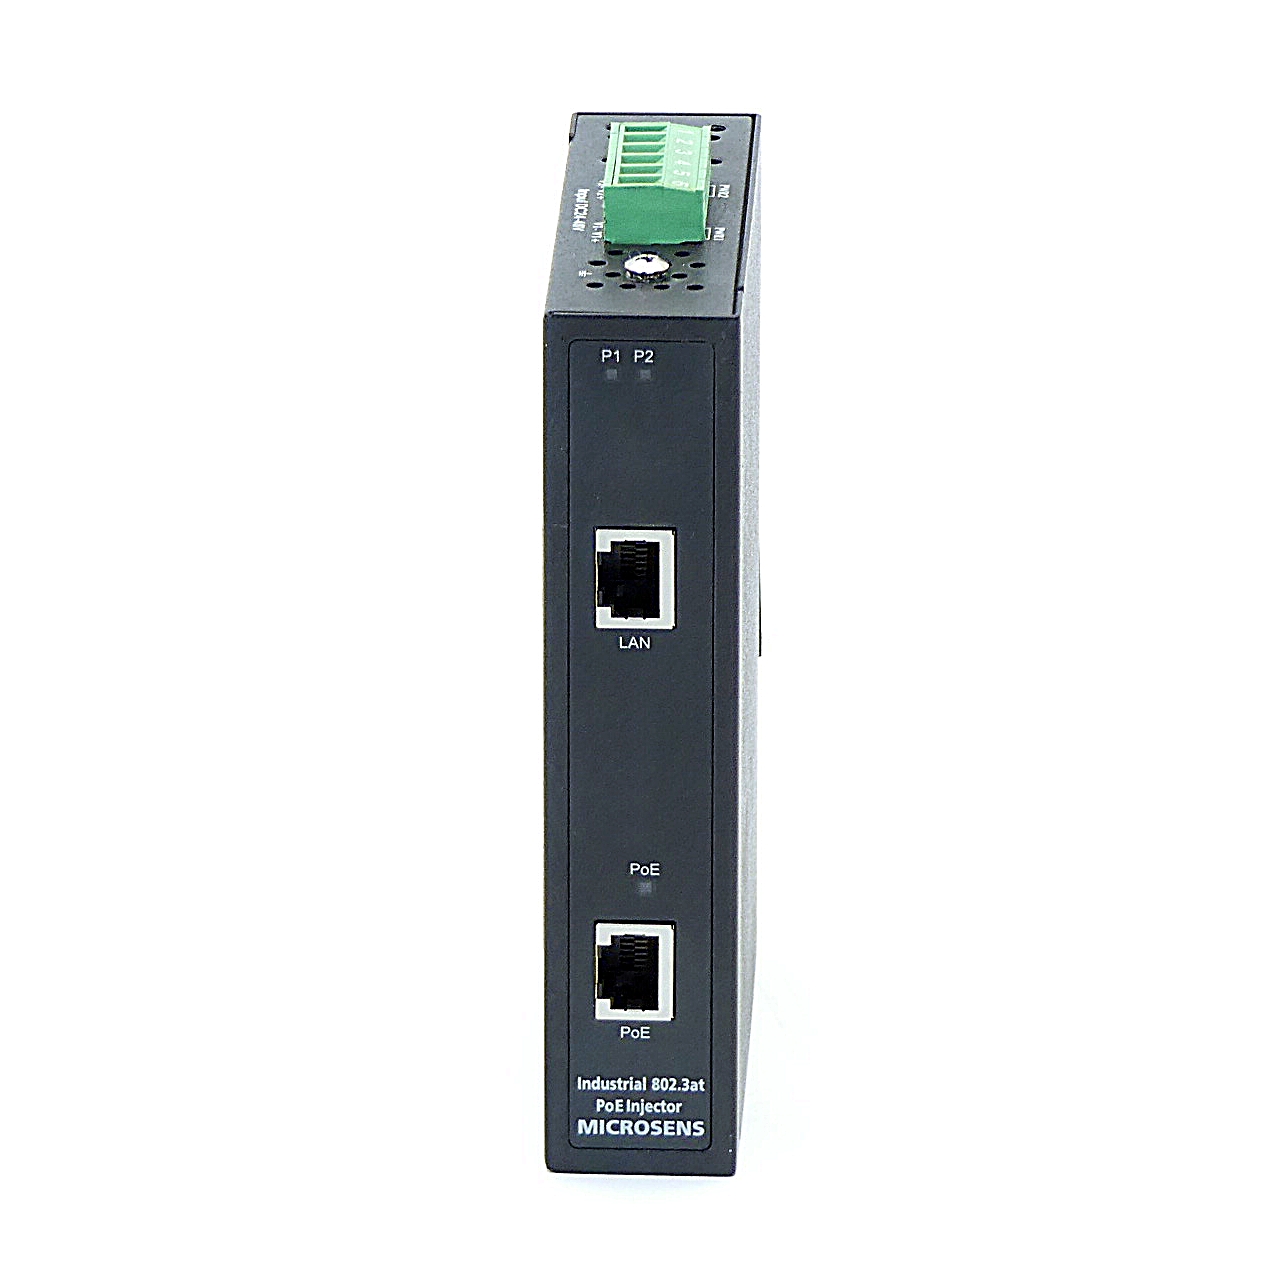 Industrial Gigabit Ethernet Power -over- Ethernet Injector IEEE 802.3at 